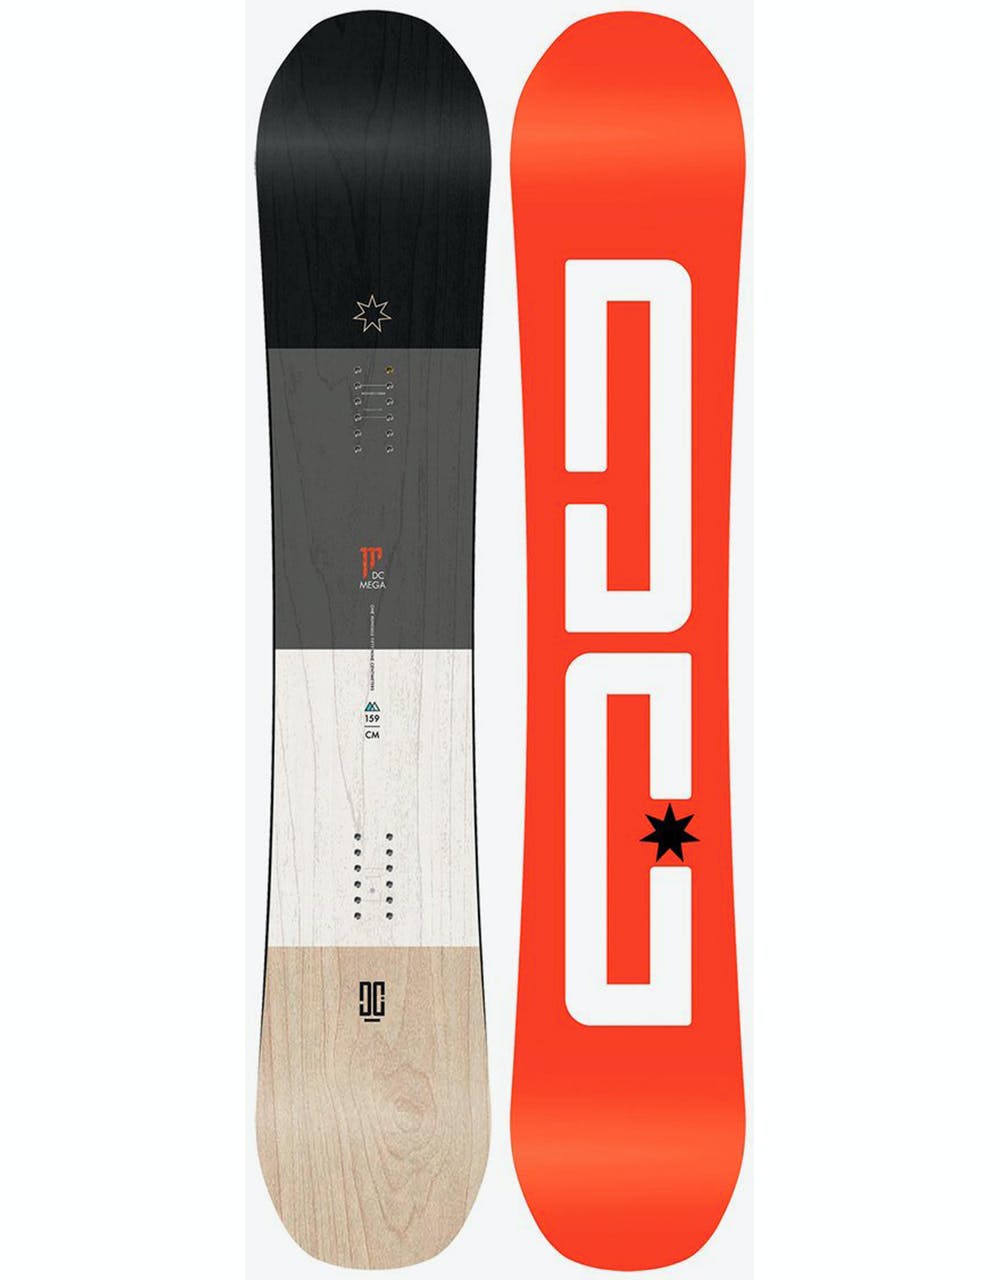 DC Mega 2020 Snowboard - 153cm